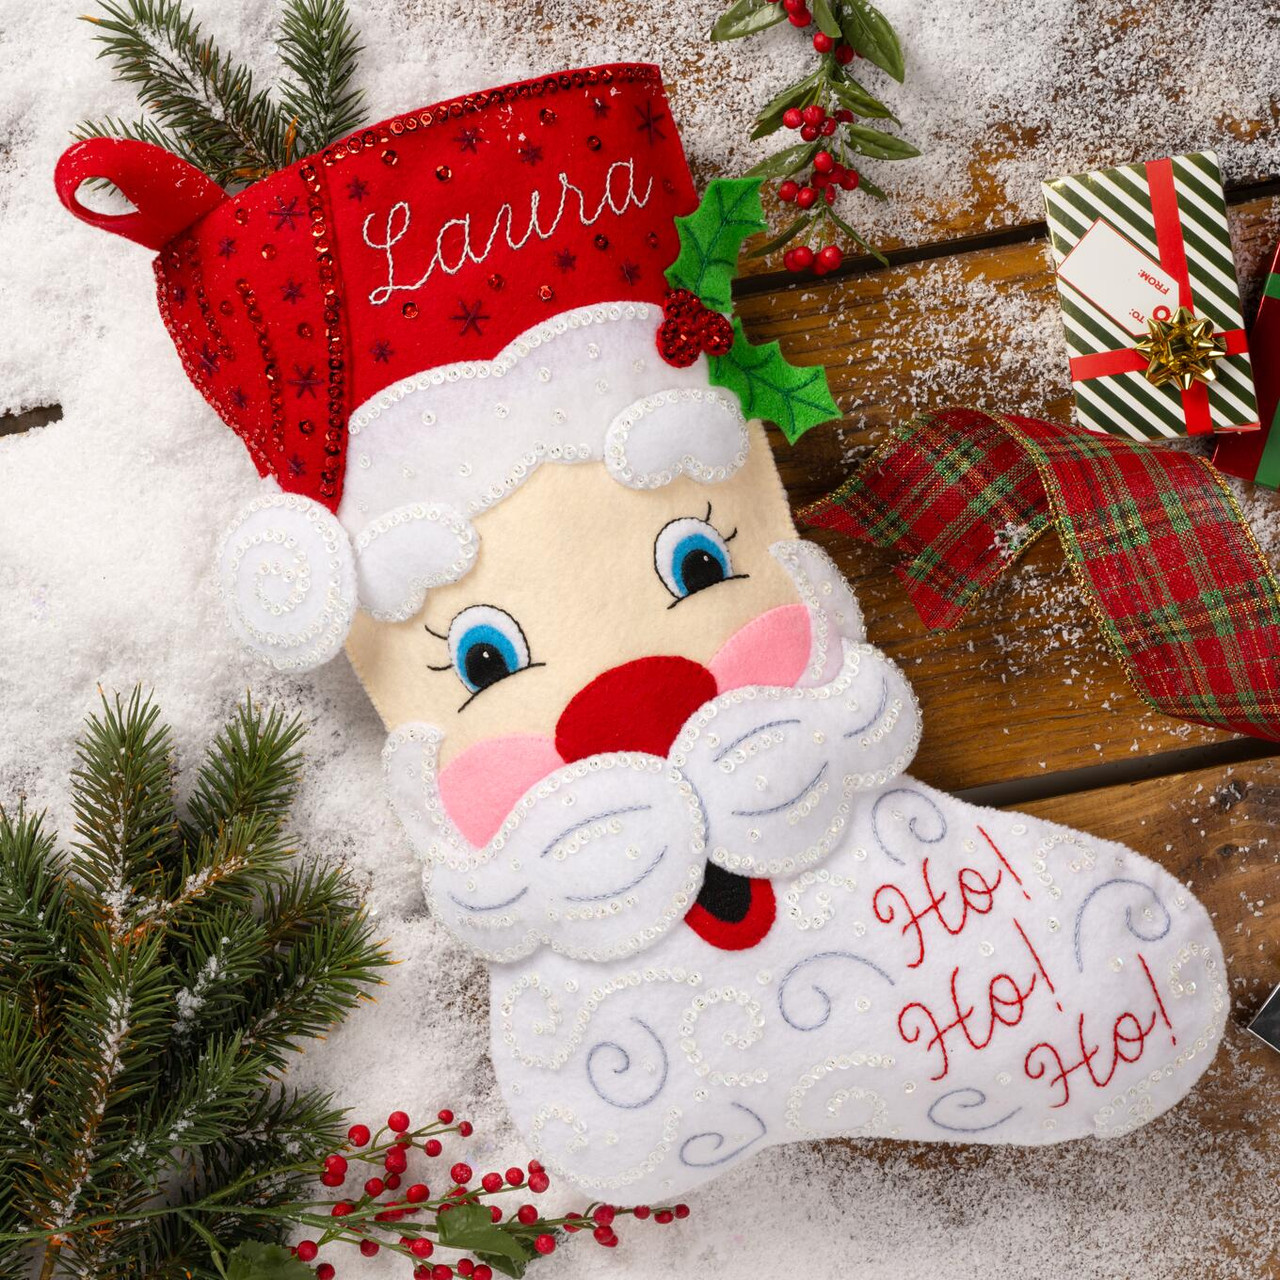 Cheerful Santa Felt stocking kit from Bucilla available at